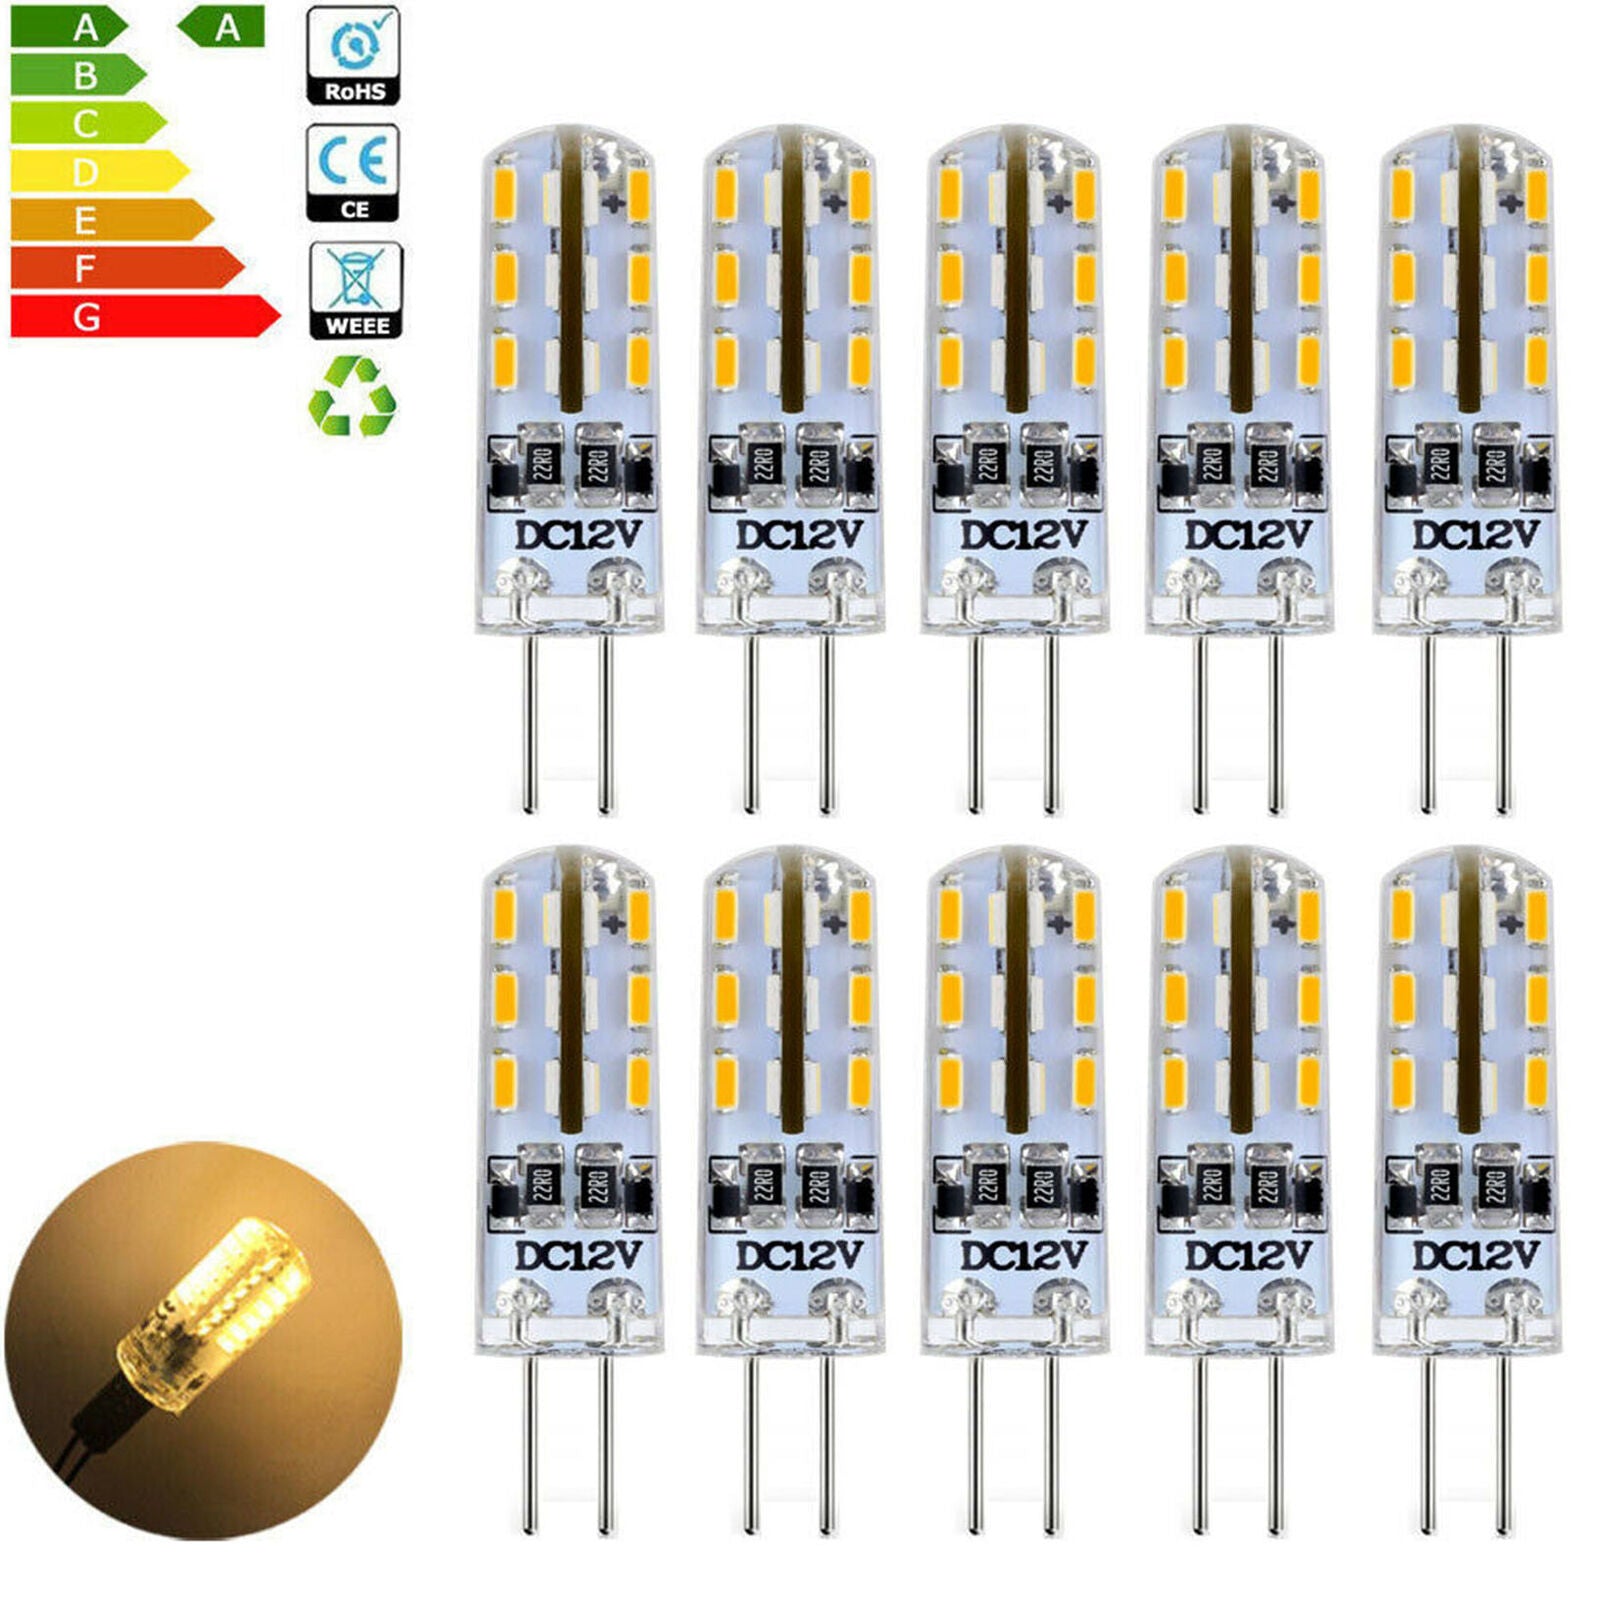 1X 10X Mini G4 Silicone Crystal LED Bulb 3W 3014 SMD Light Lamp 12V